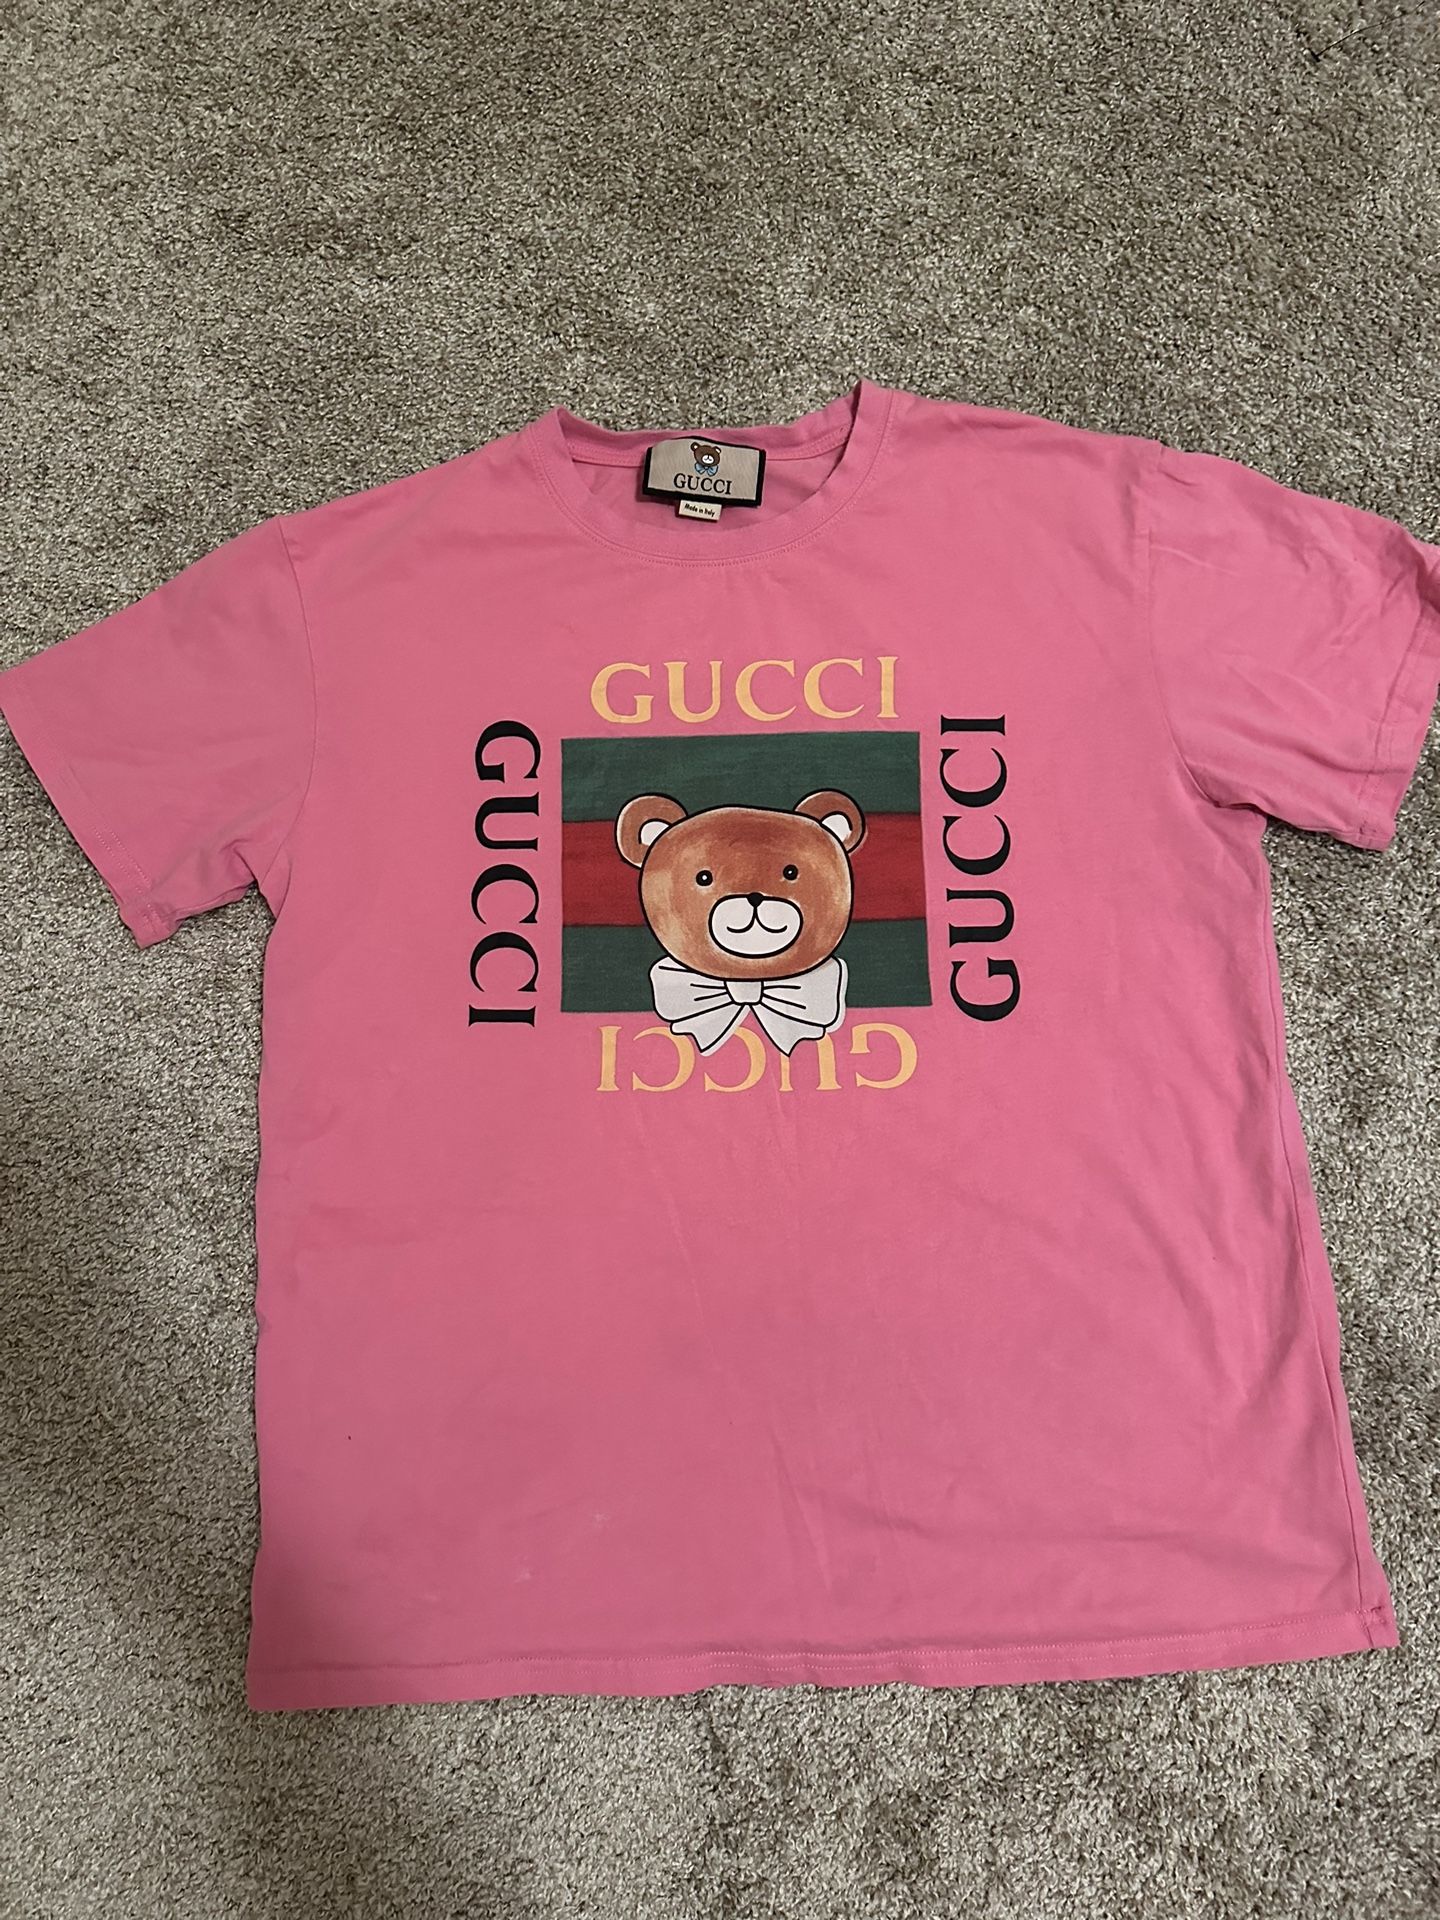 Gucci Men Shirt